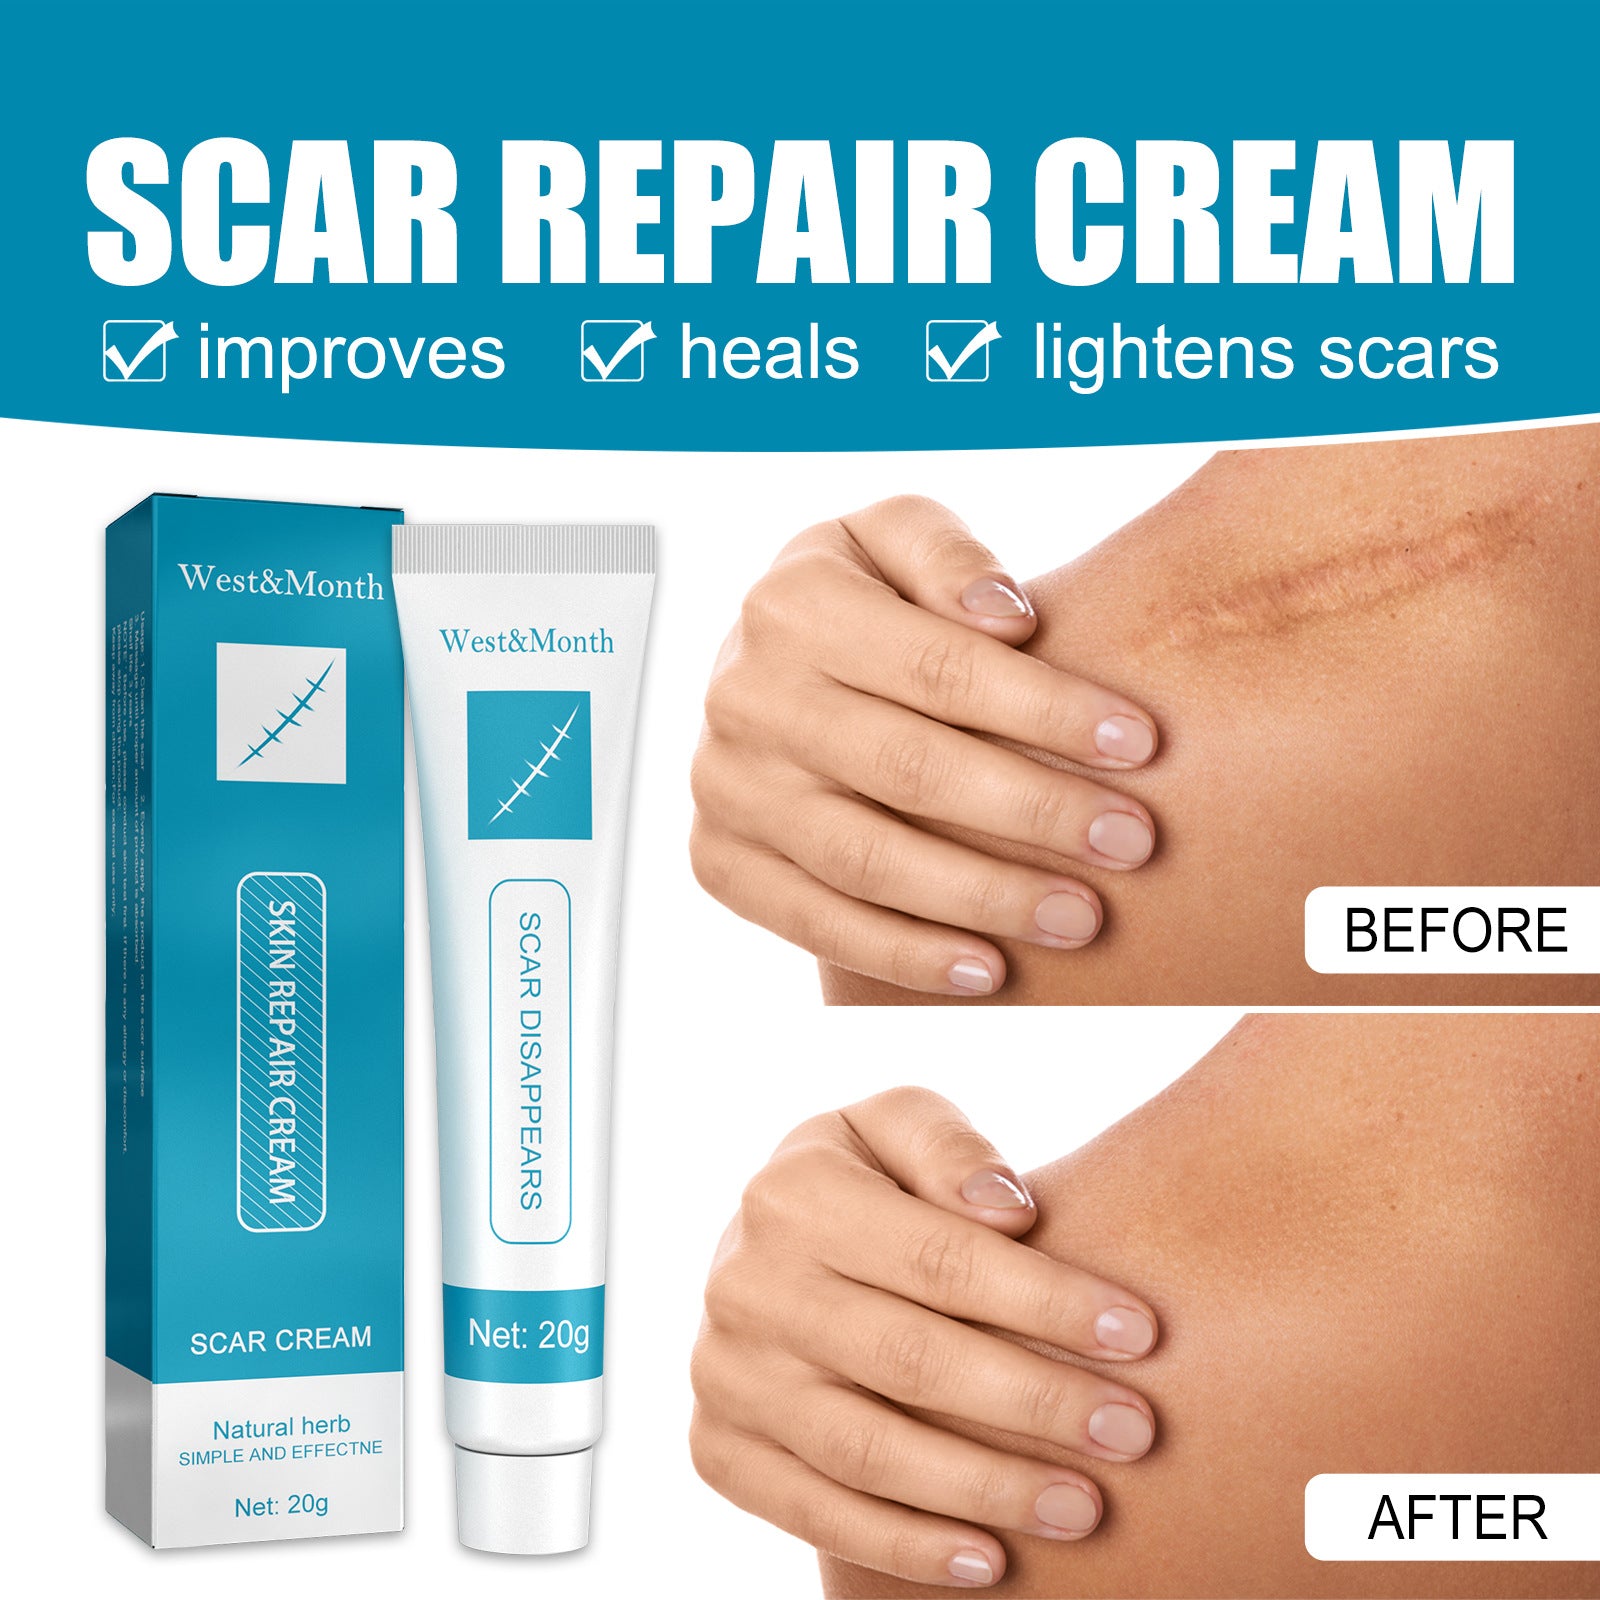 Natural cream scar repair cream scar cream fade hyperplasia pregnancy surgery burn scar skin repair